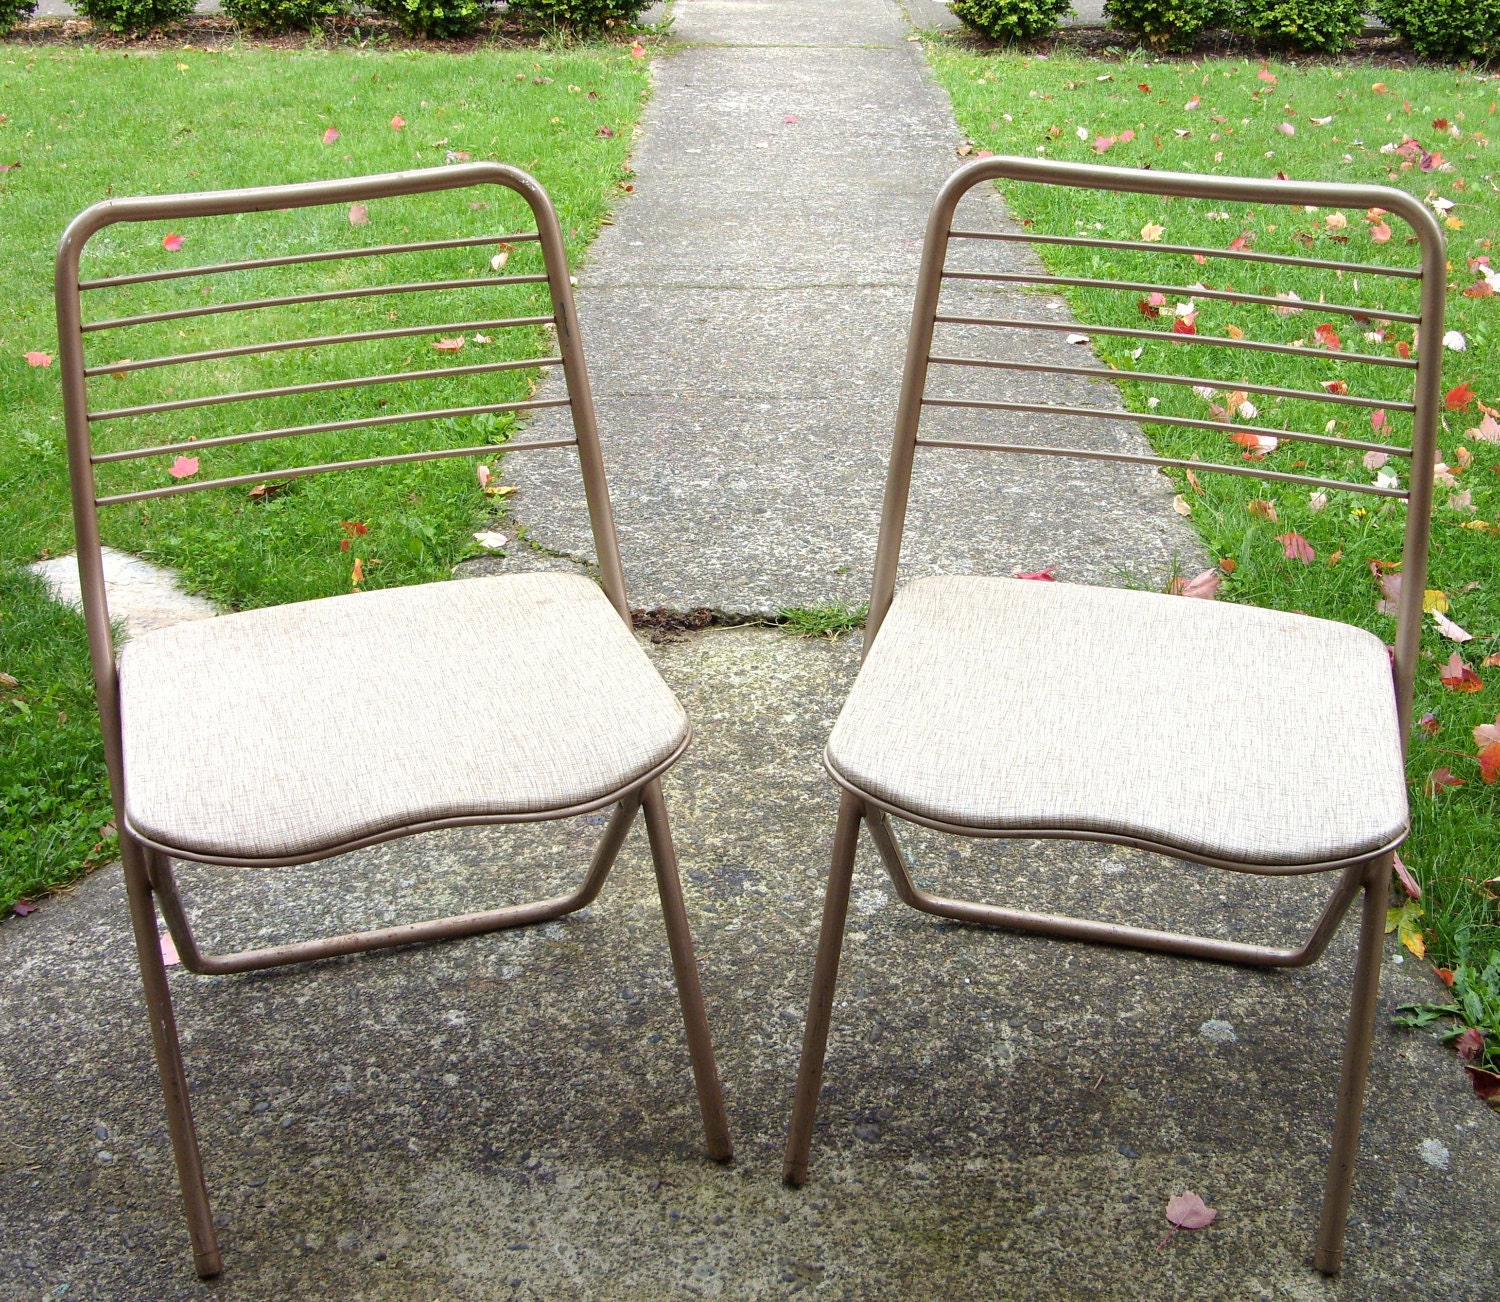 vintage metal folding chairs | Metal chairs, Metal folding chairs